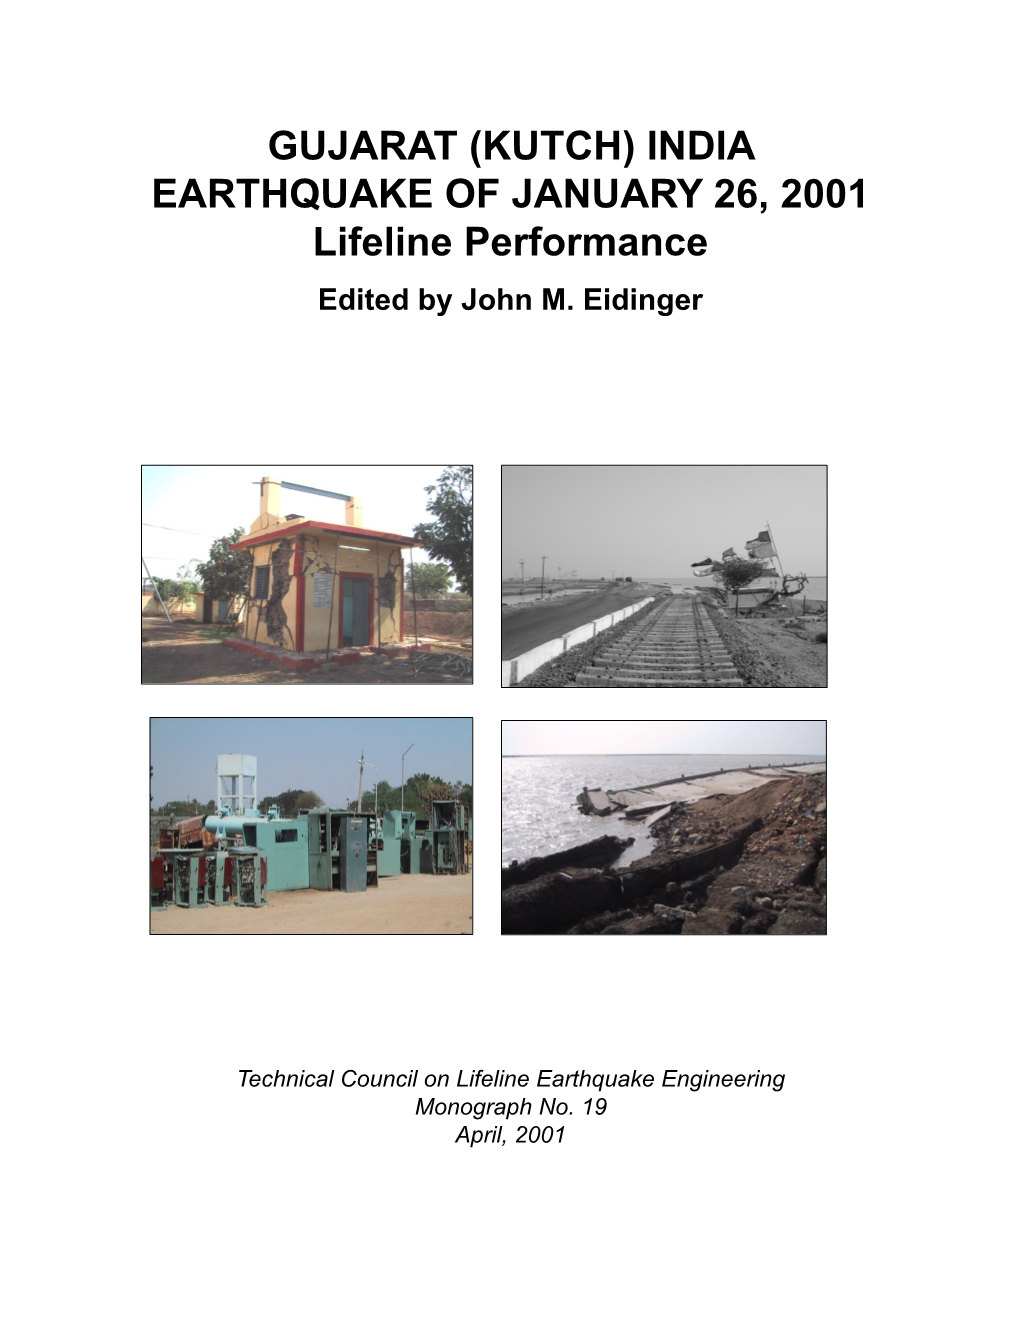 GUJARAT (KUTCH) INDIA EARTHQUAKE of JANUARY 26, 2001 Lifeline Performance Edited by John M